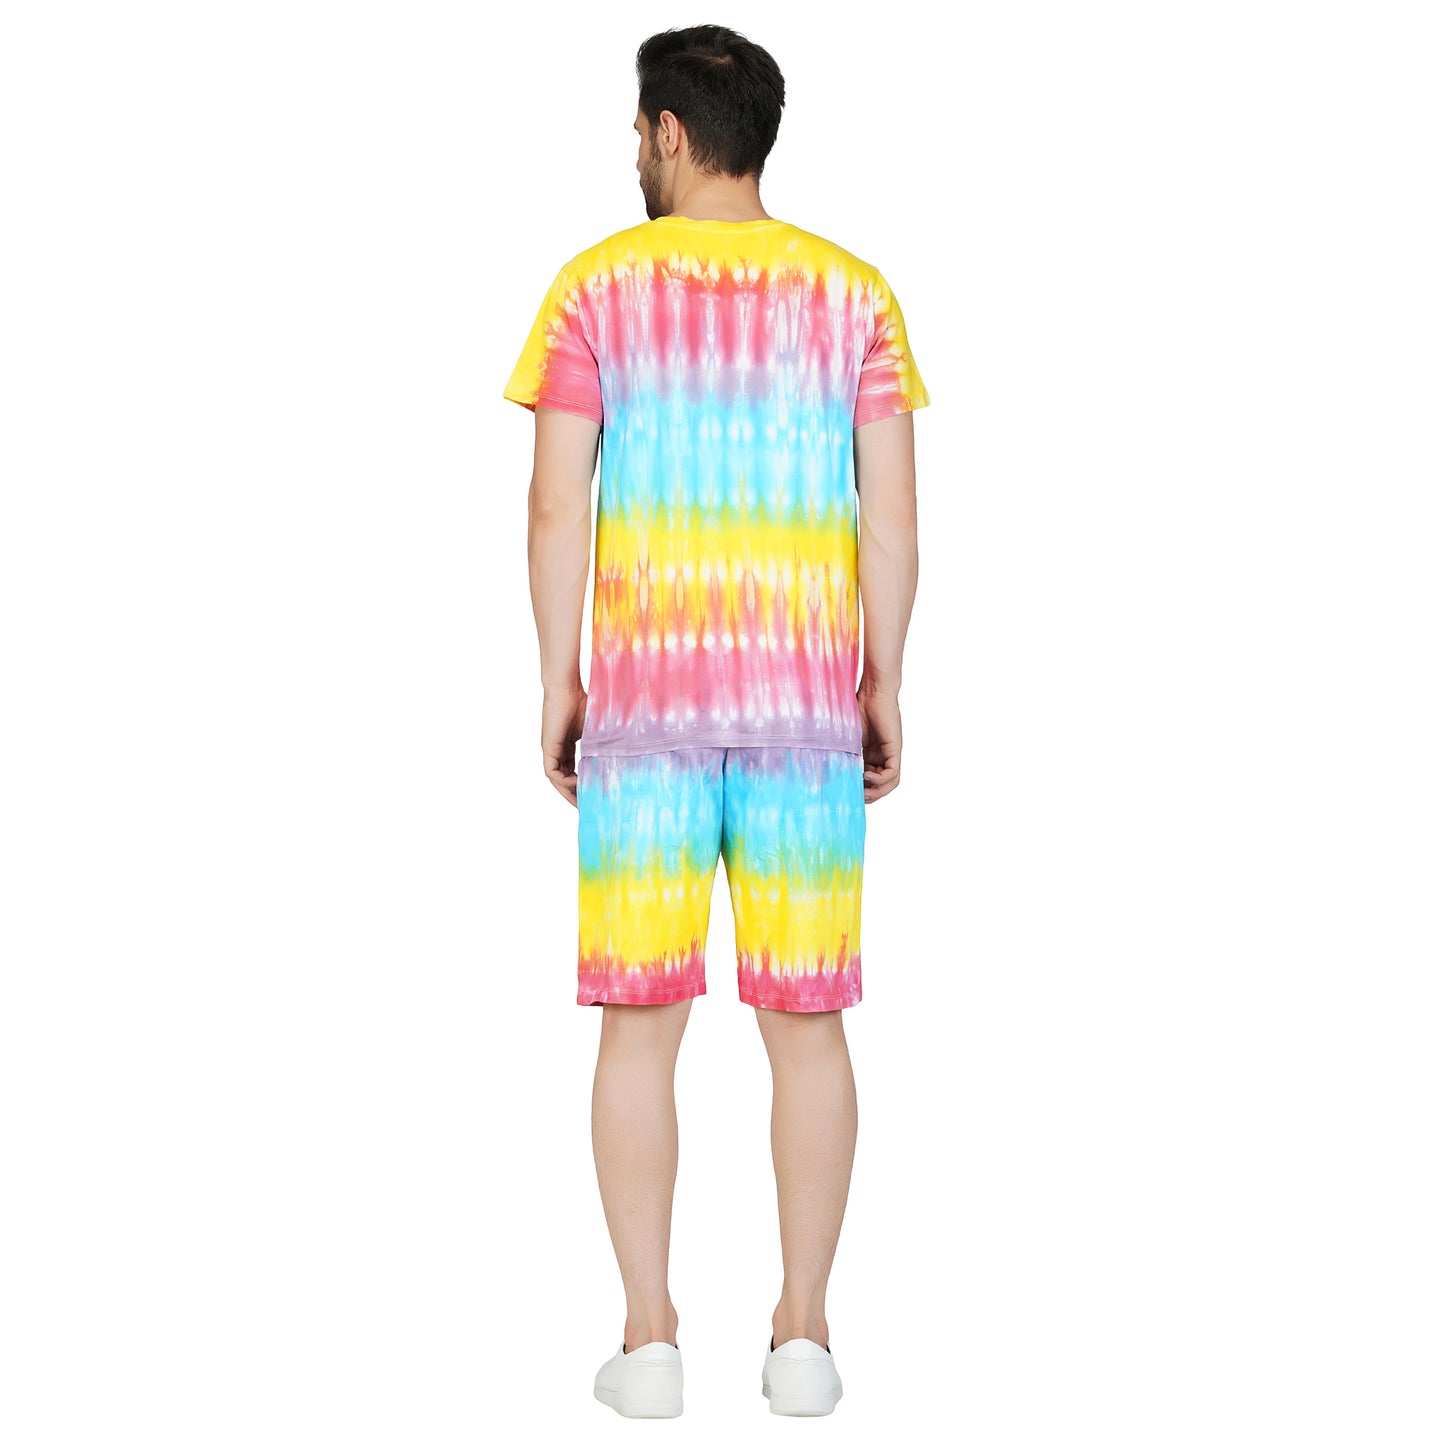 SLAY. Men's Rainbow Tie Dye T shirt & Shorts Co-ord Set